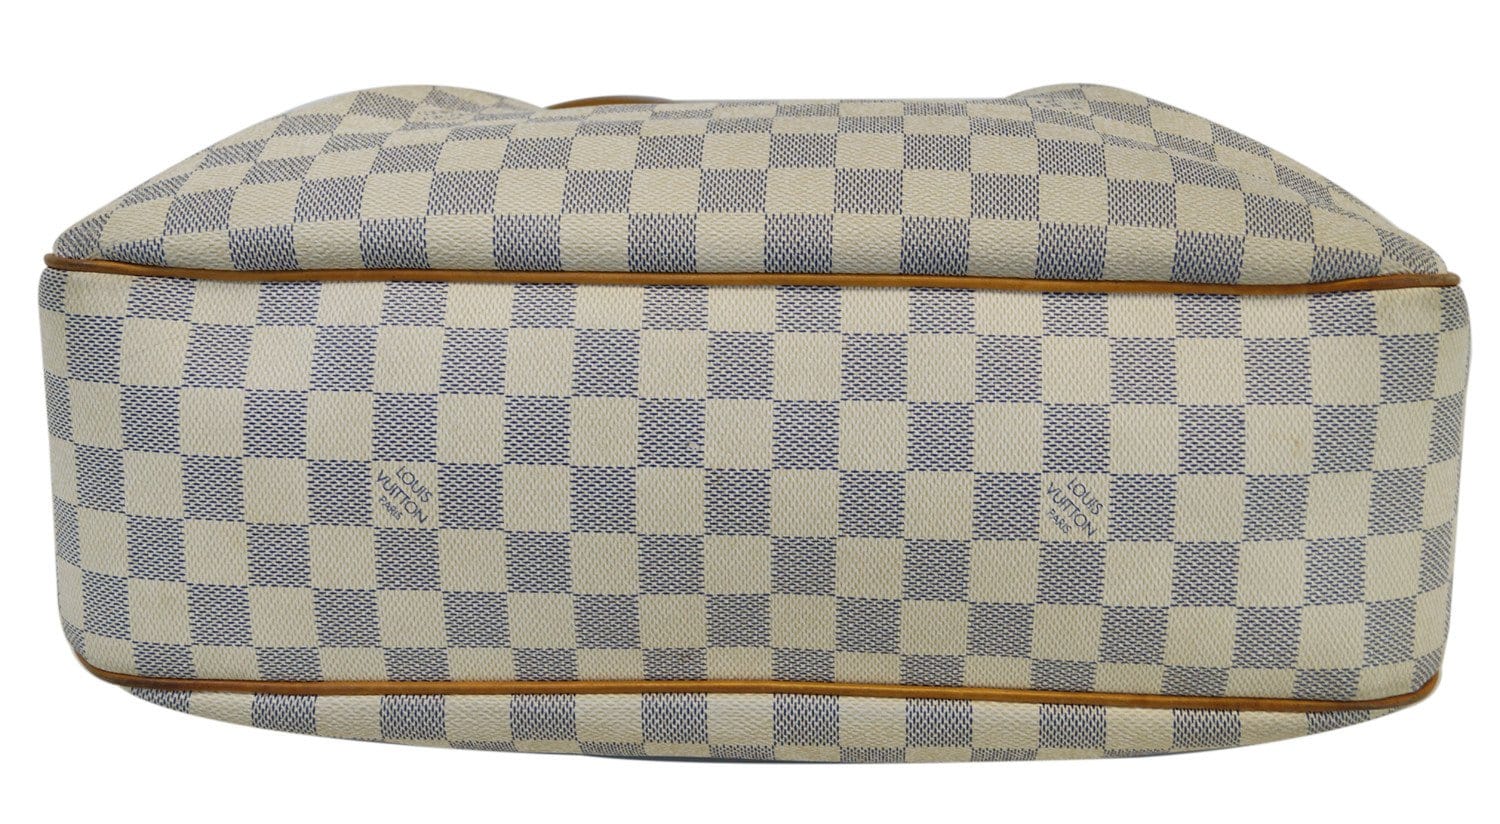 Louis Vuitton Siracusa MM Crossbody Bag in Damier Azur